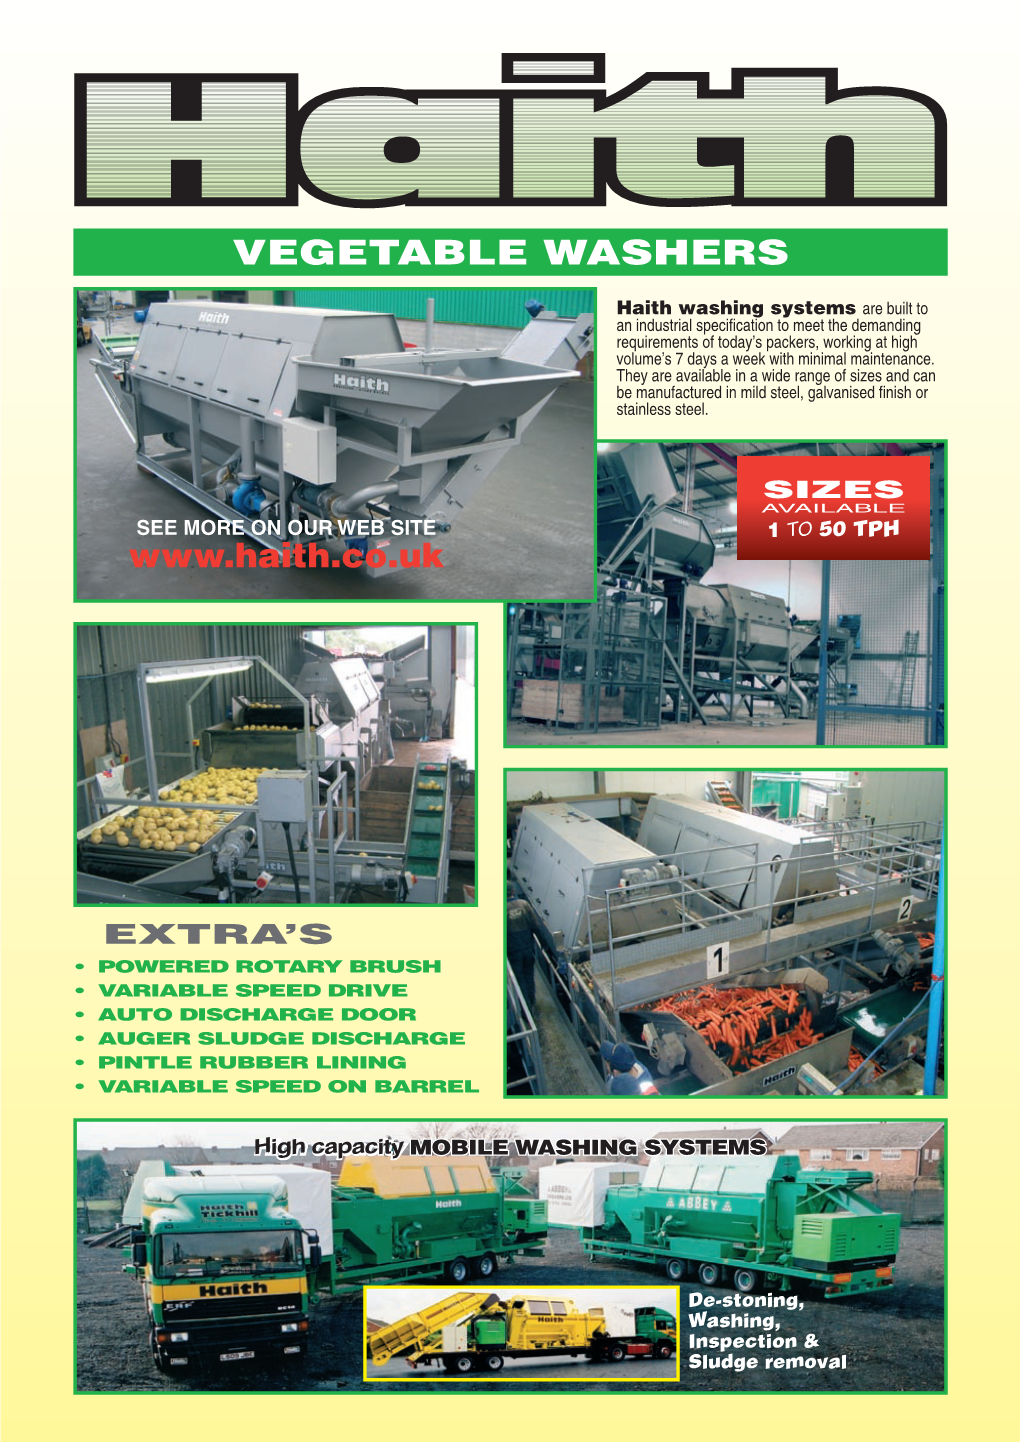 Vegetable Washers